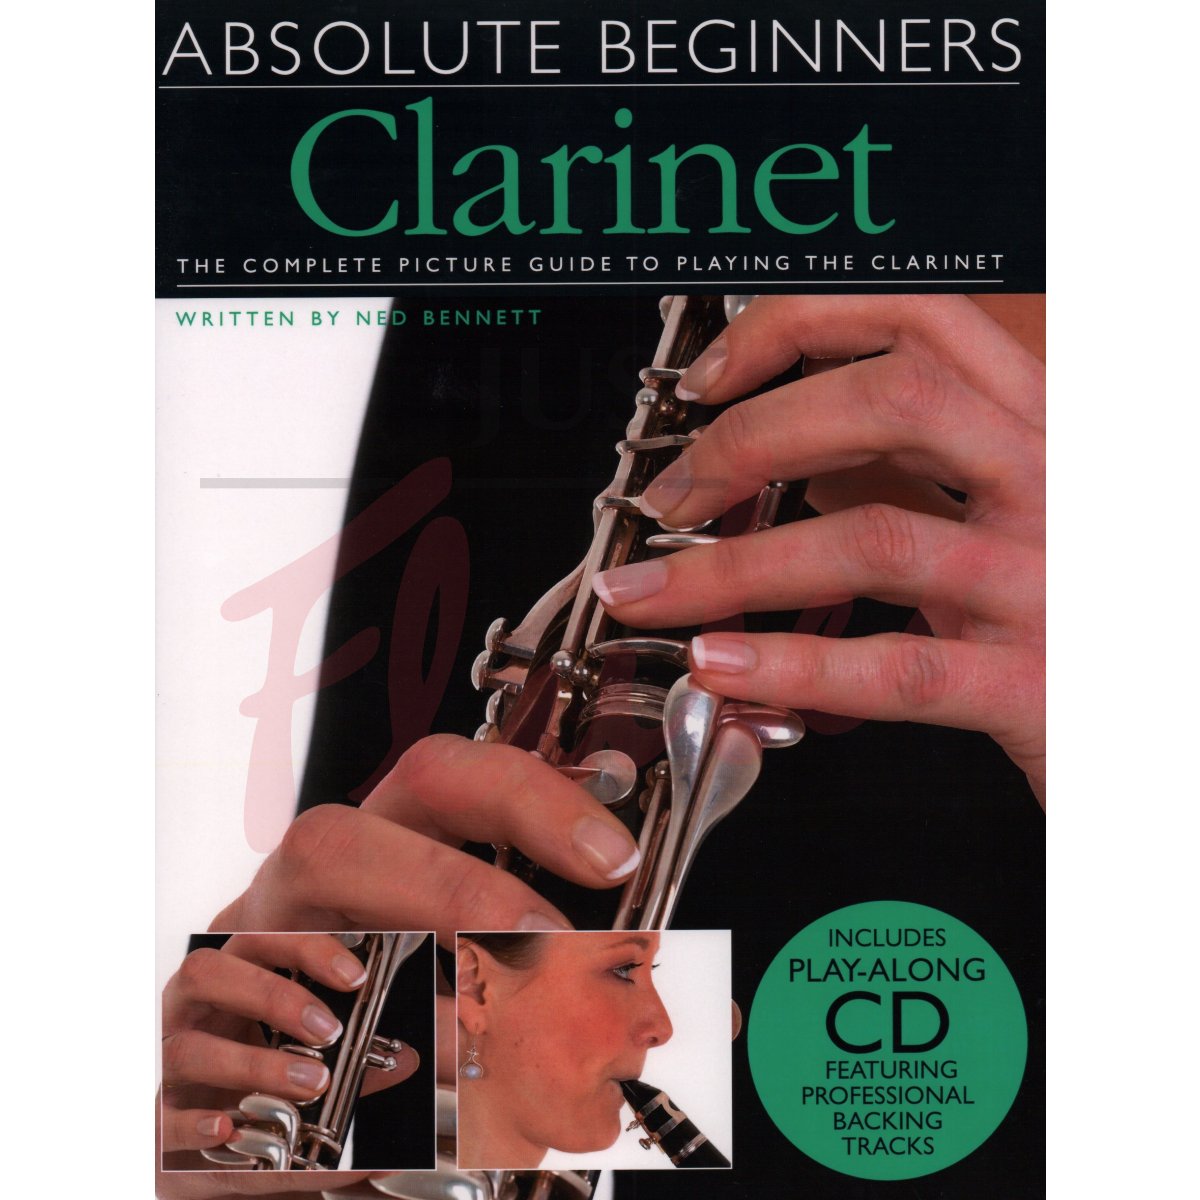 Absolute Beginners Clarinet